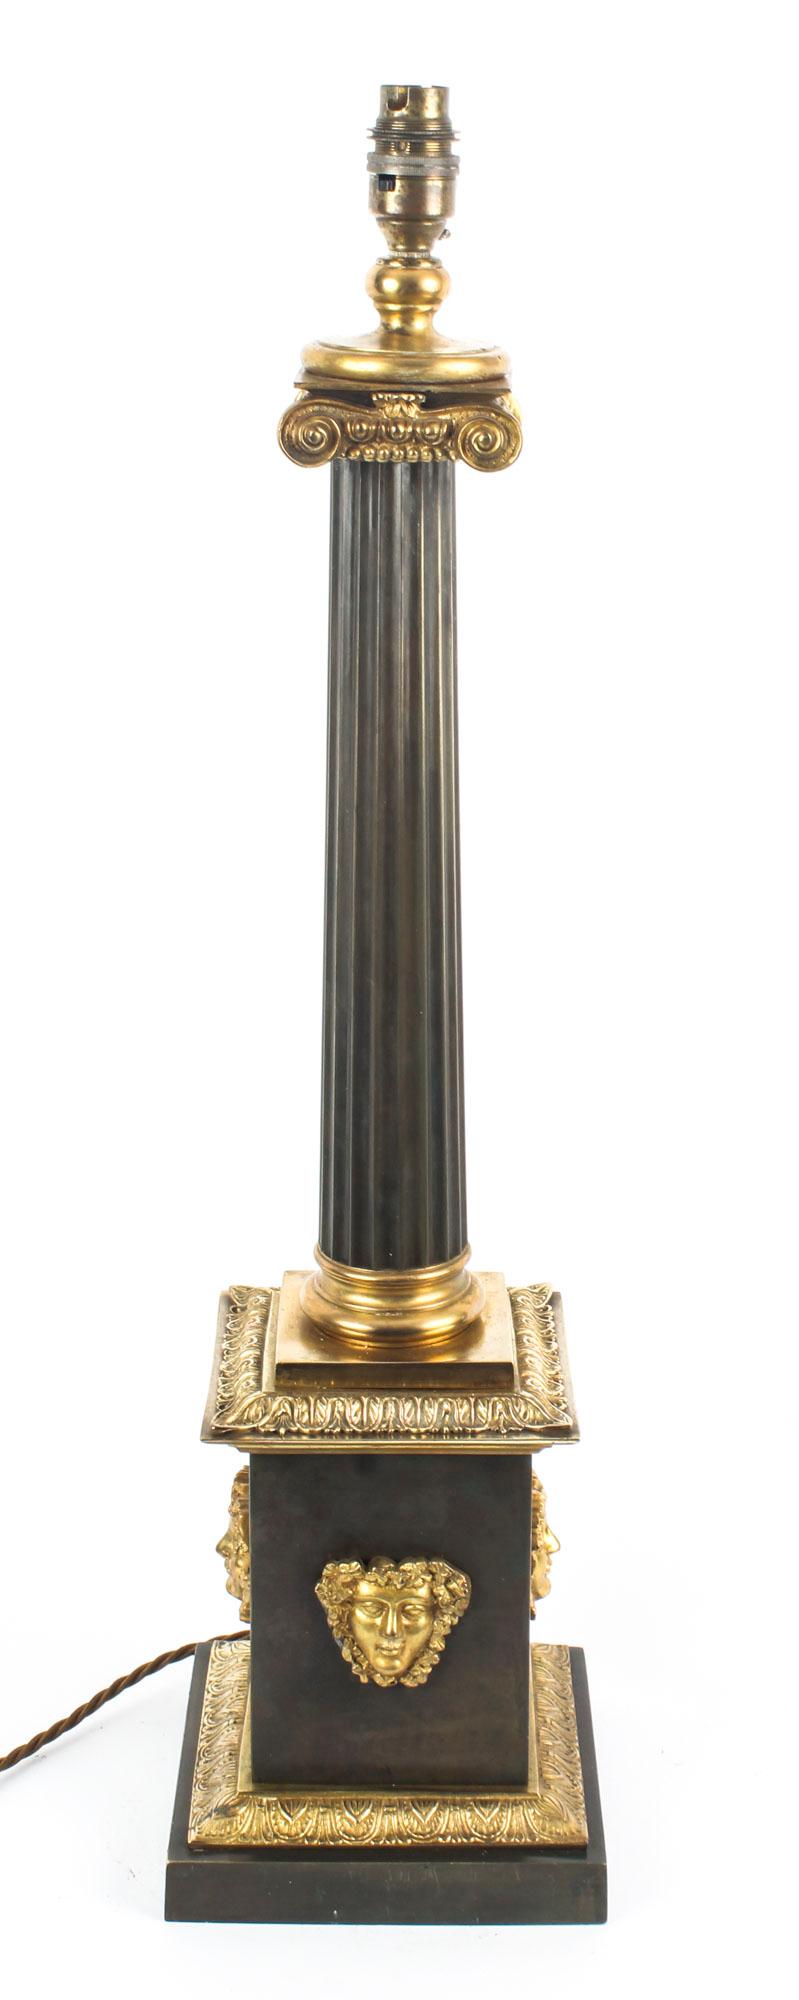 Ormolu Antique French Empire Period Corinthian Column Table Lamp, 19th Century